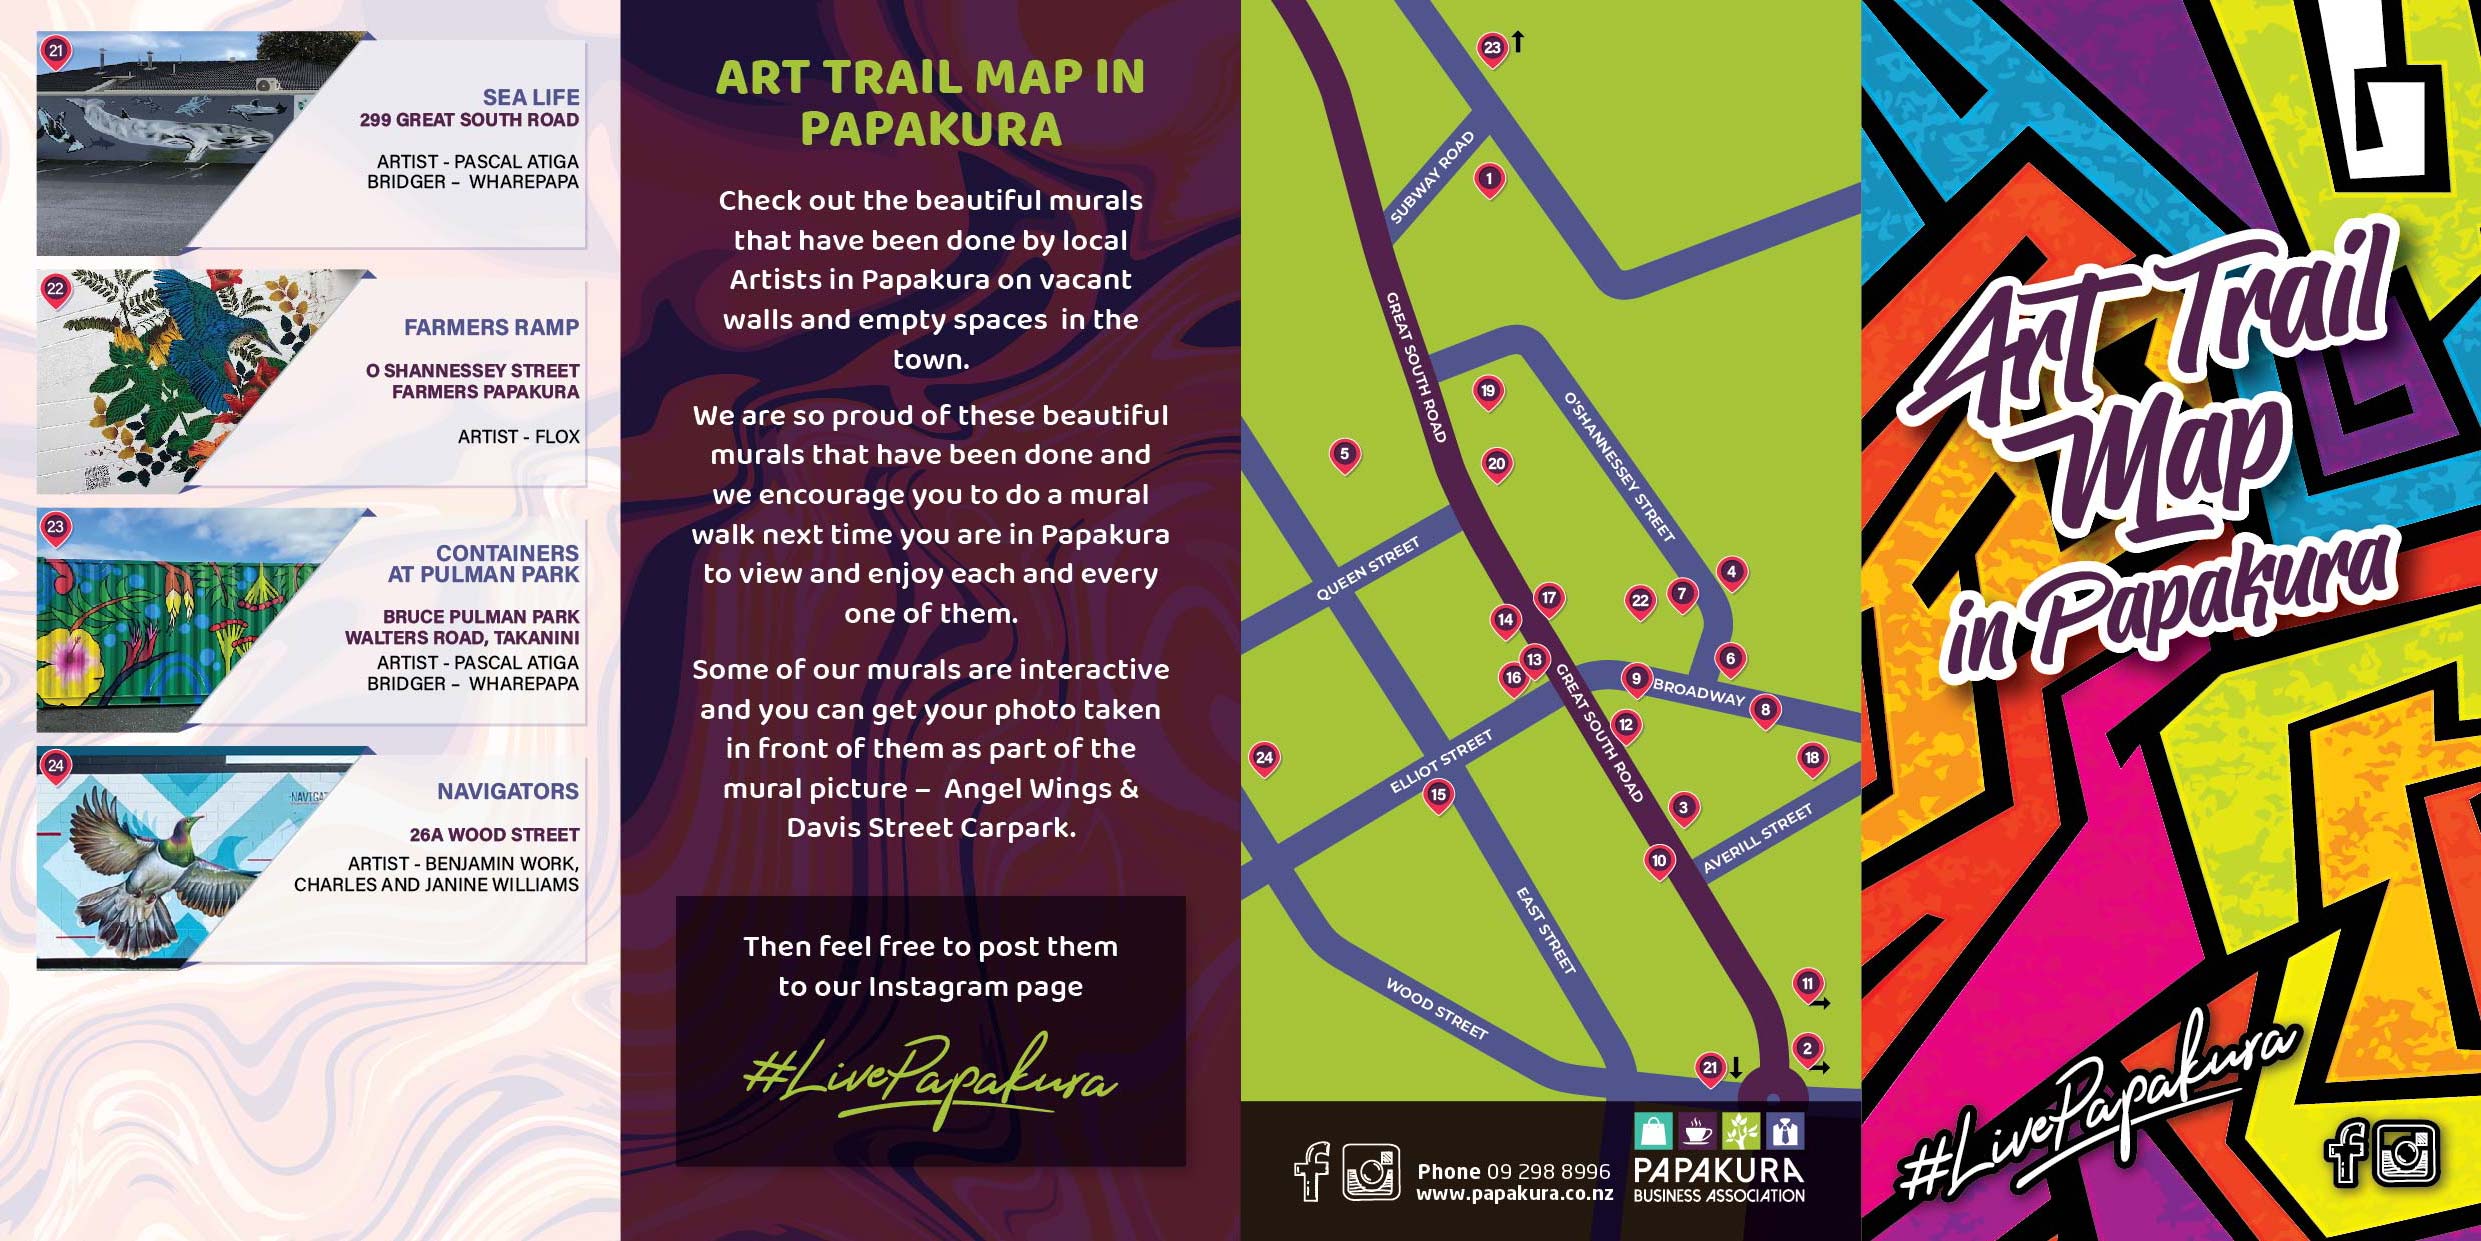 Papakura Art Trail Map